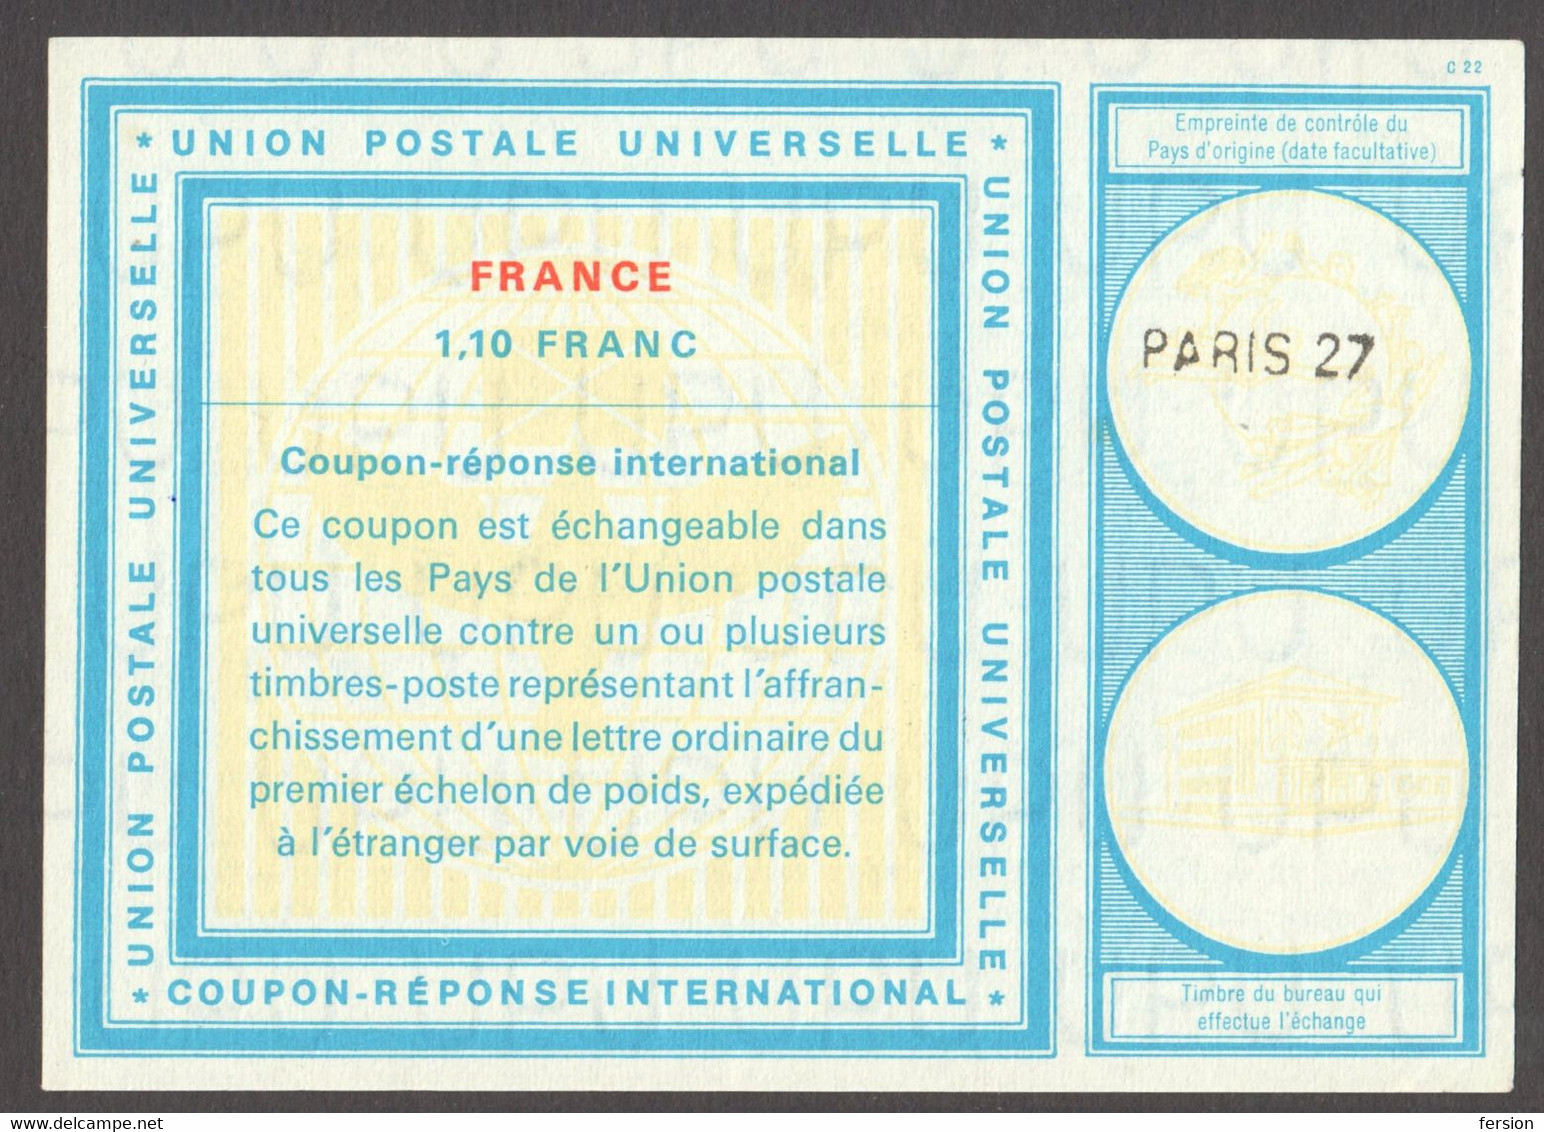 1970's FRANCE UPU Coupon Résponse International C22 Reply Coupon REPONSE - PARIS 27 Model Vienna WIEN - Cupón-respuesta